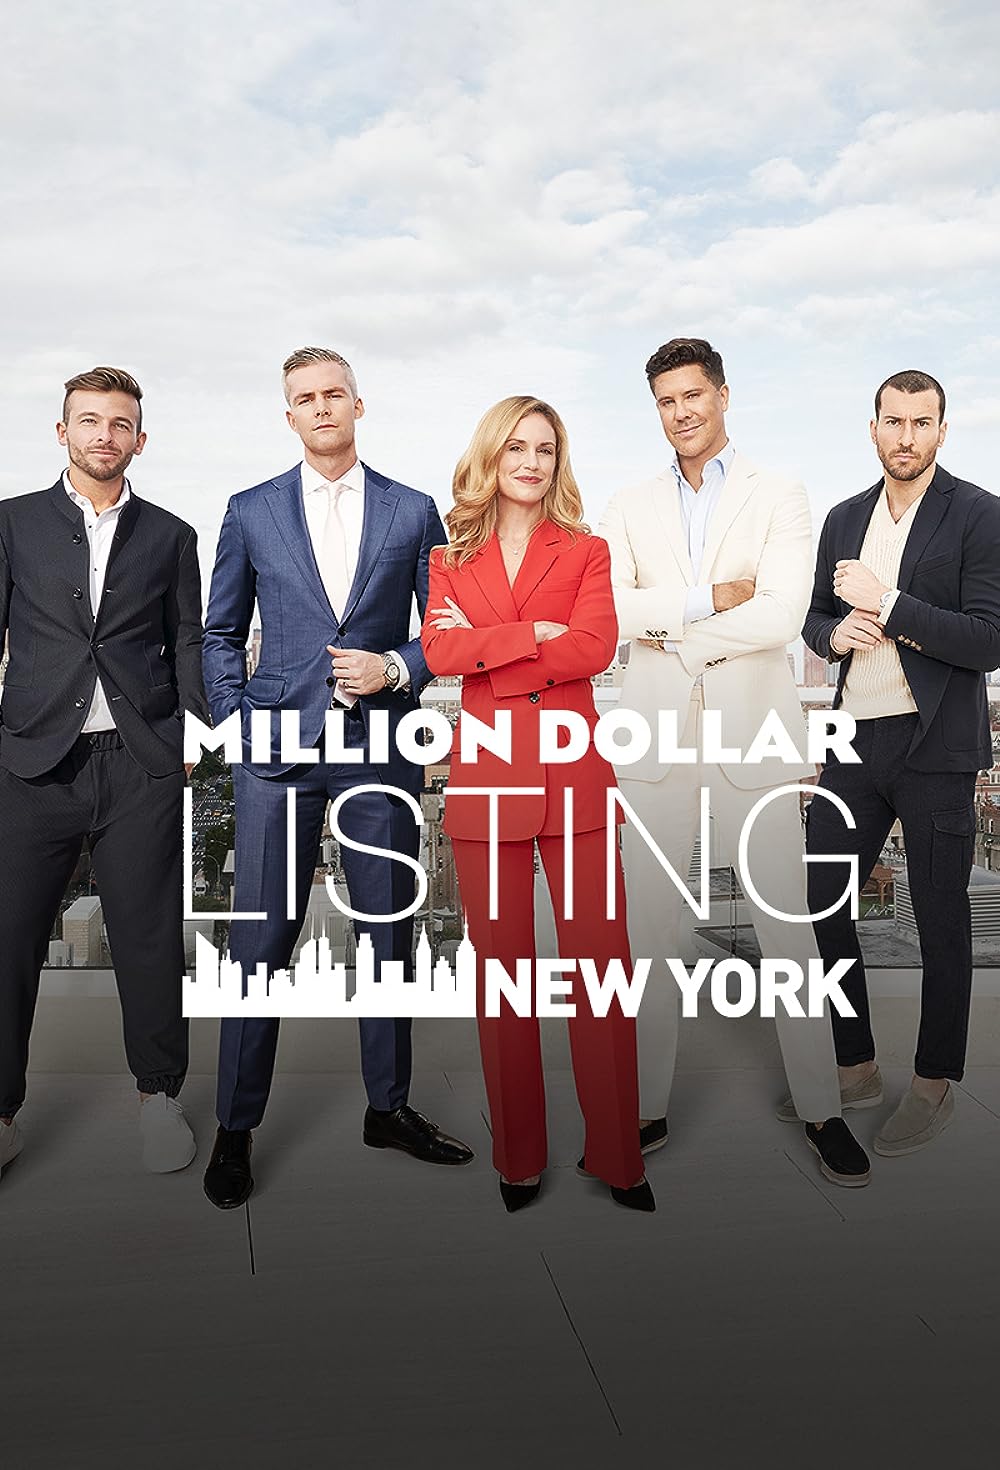 Million Dollar Listing NY